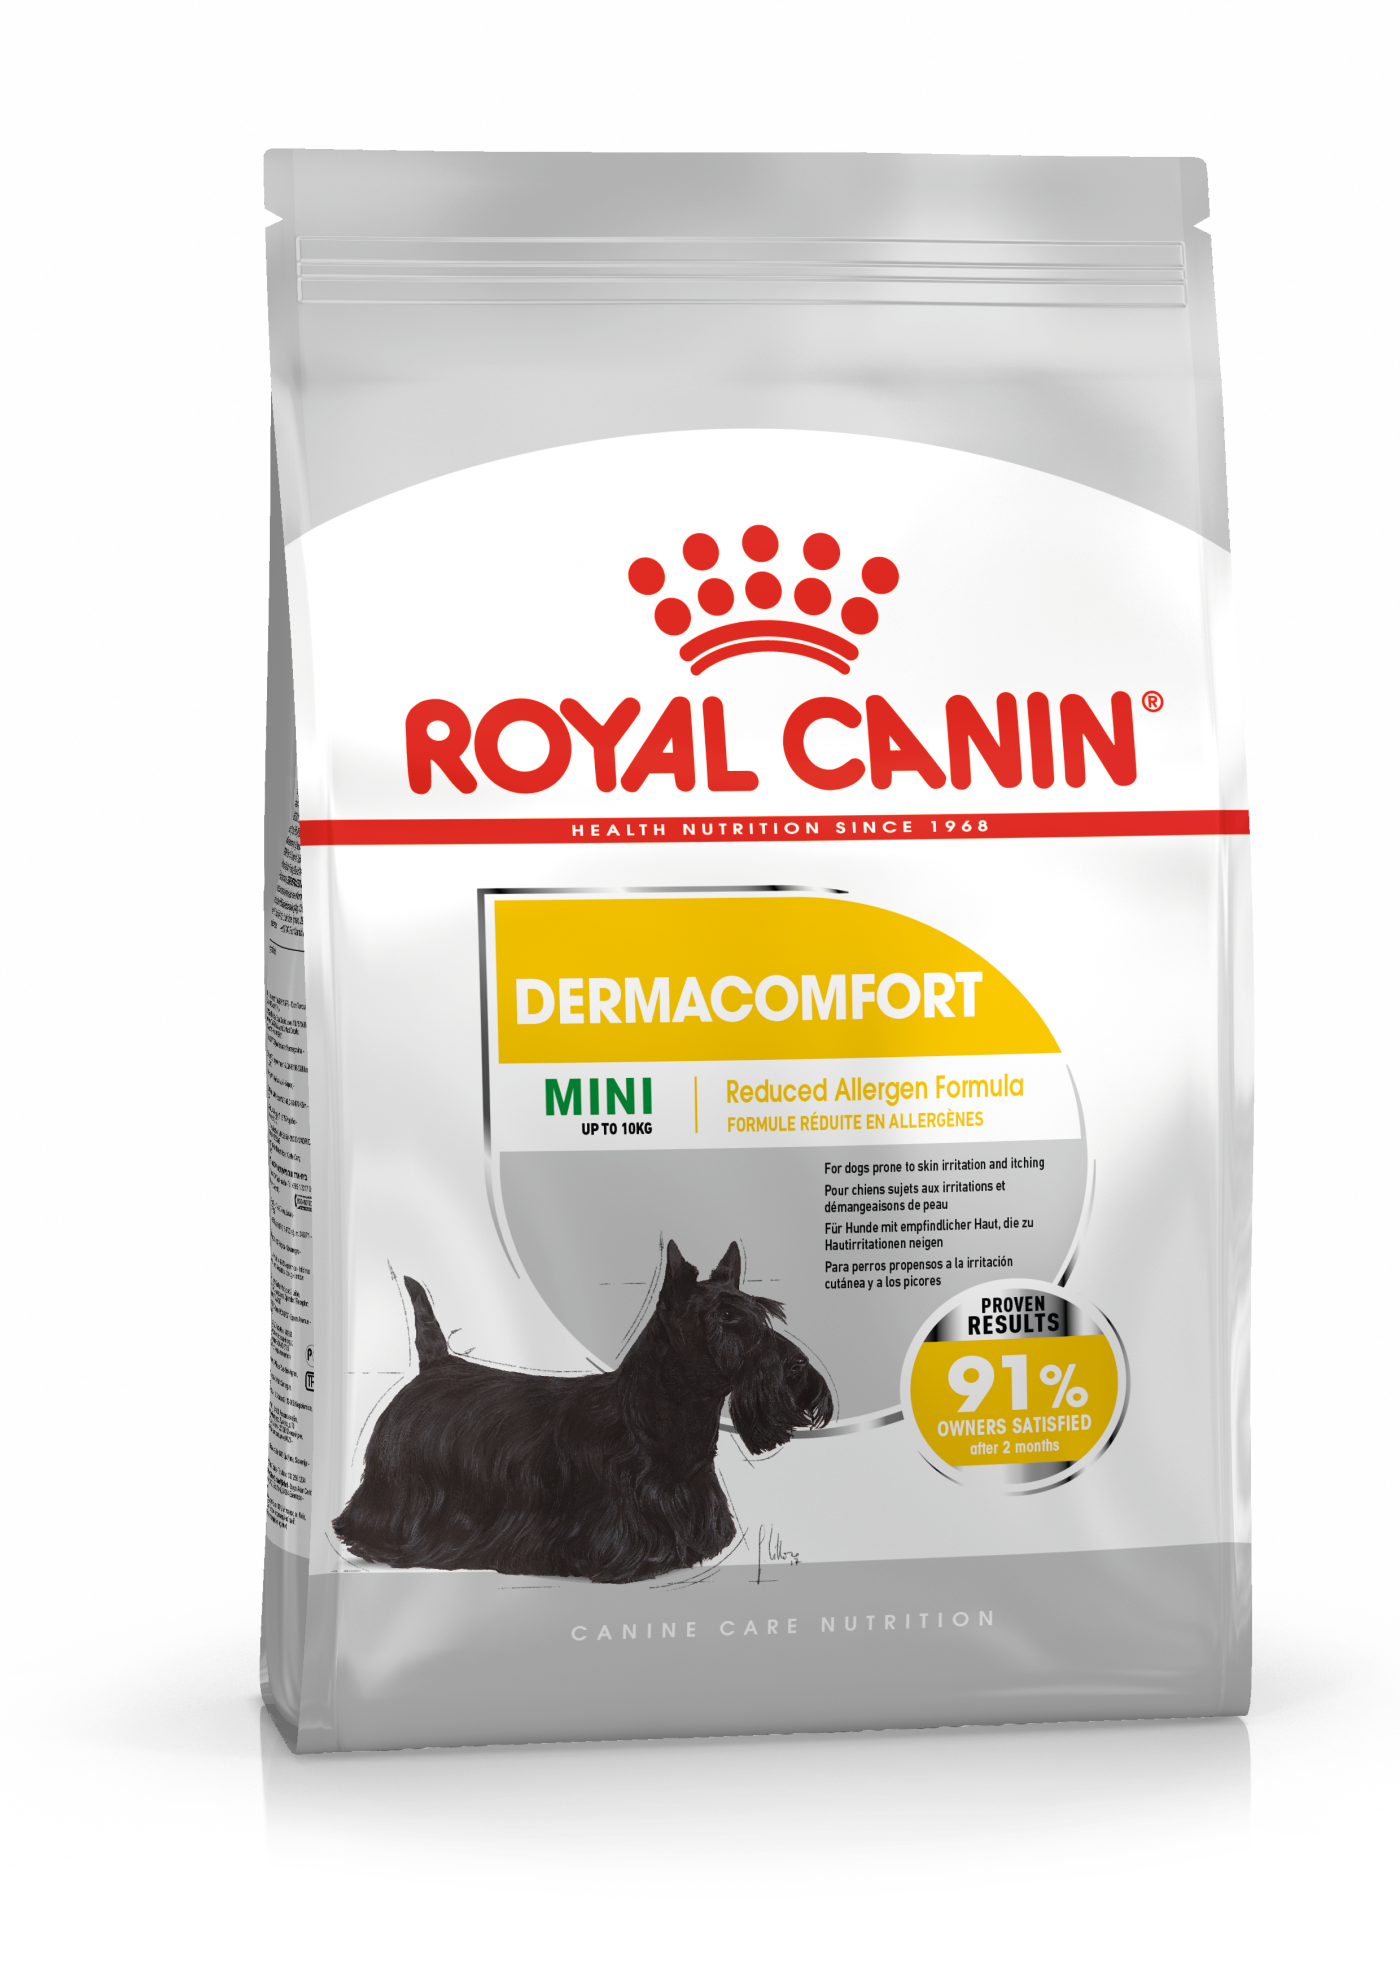 Royal Canin Dermacomfort Mini pack shot